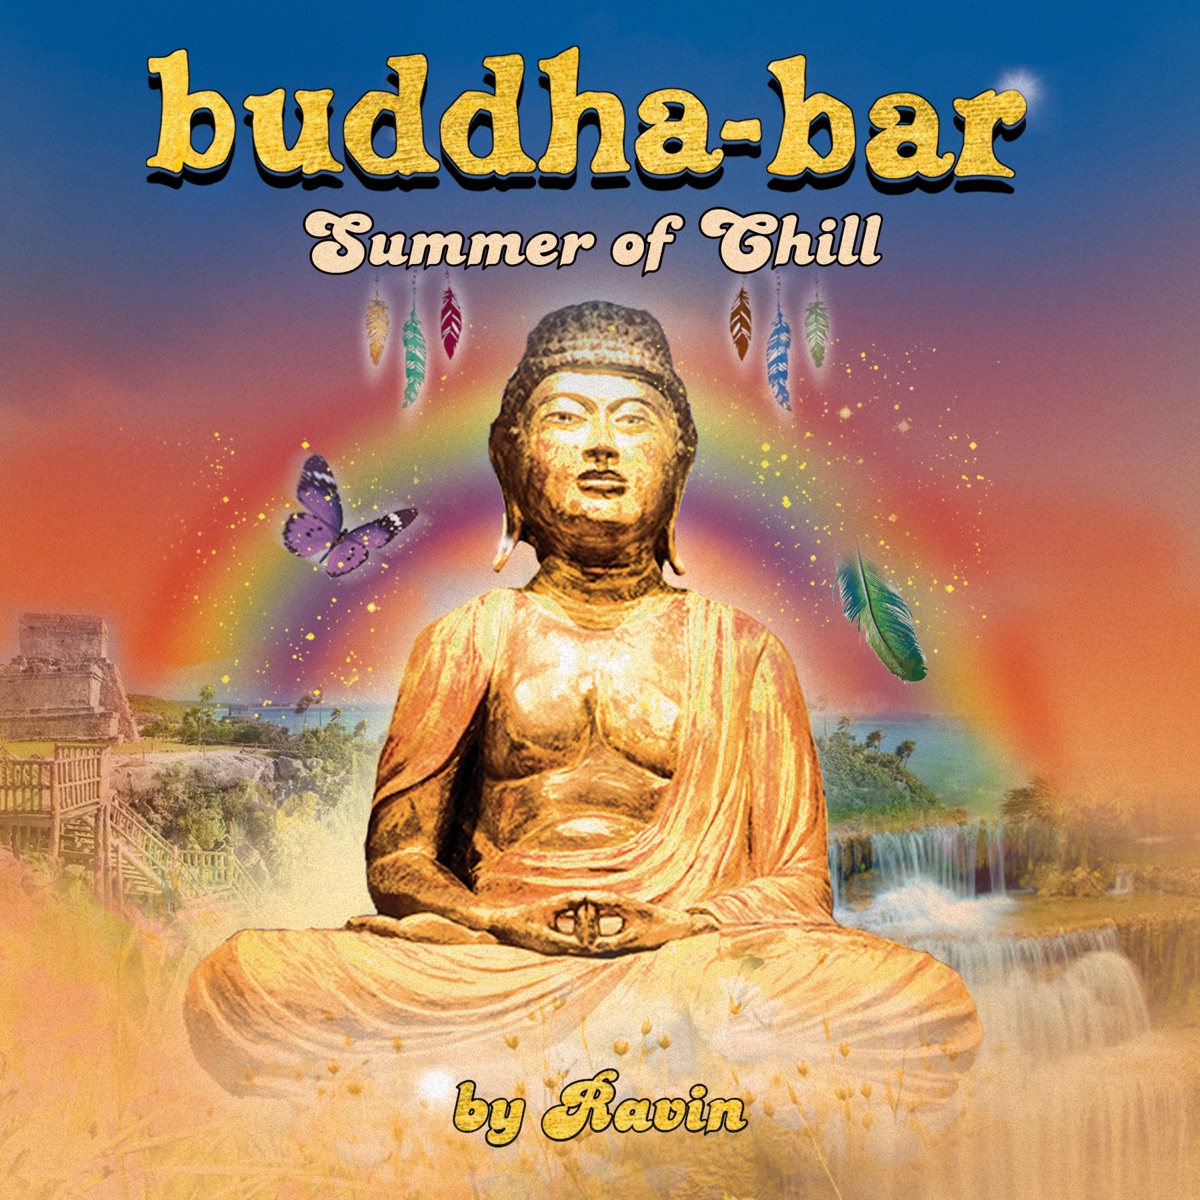 Buddha Bar Beach: Saint Tropez by Buddha Bar on Apple Music